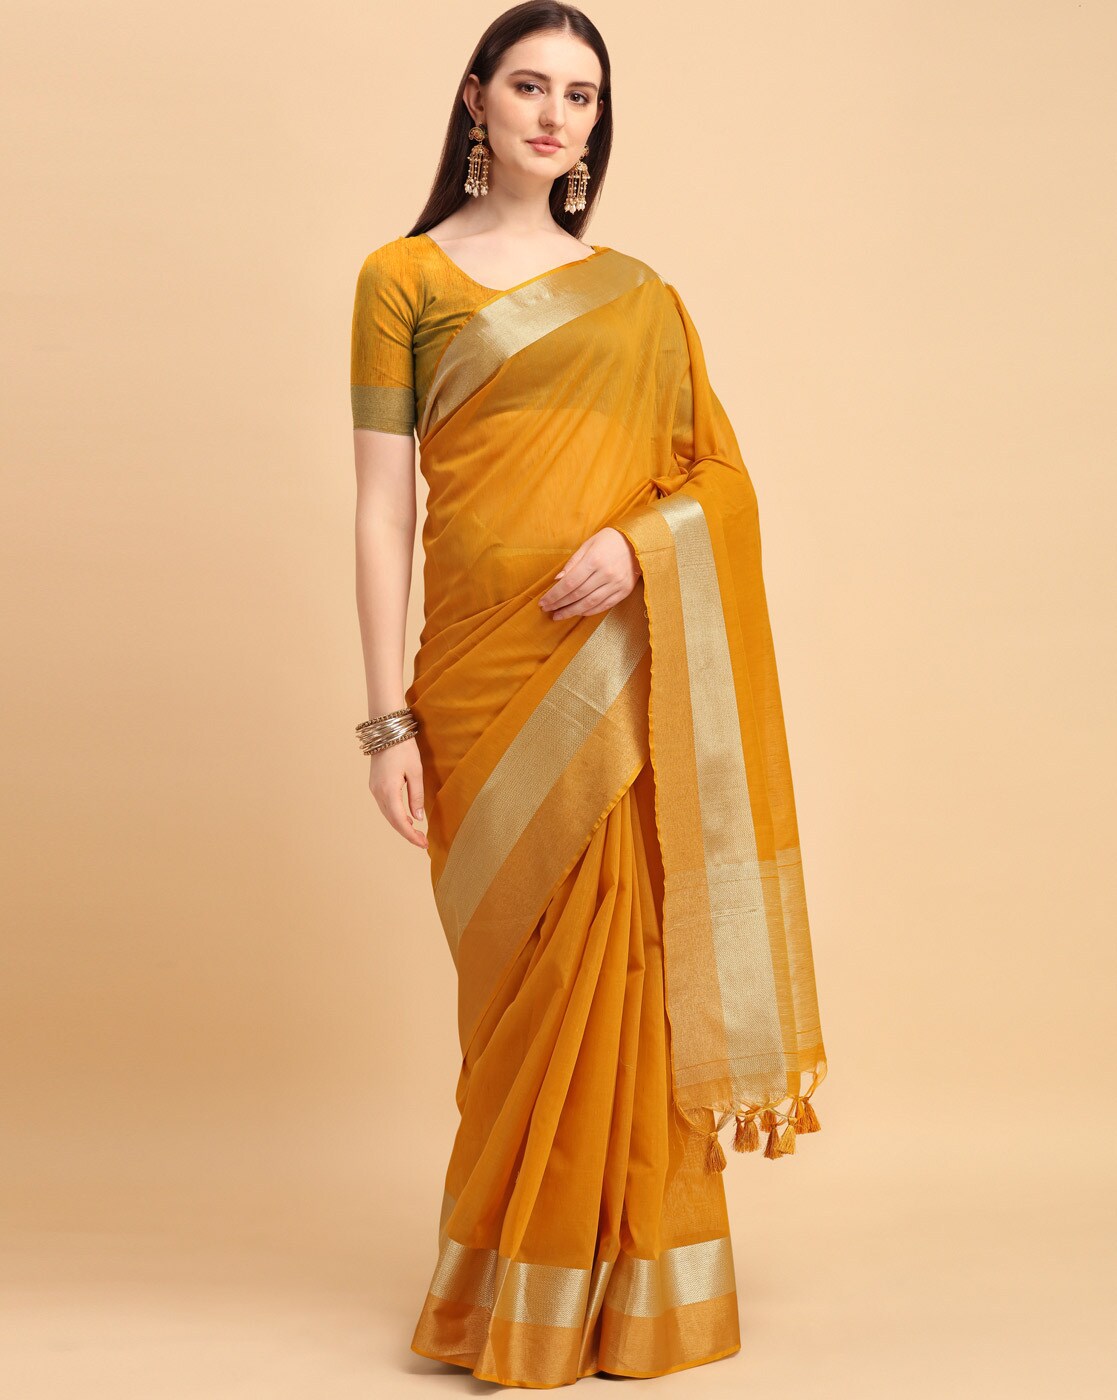 Pin by elsa on saree | Blouse design models, Wedding blouse designs, Indian  beauty saree